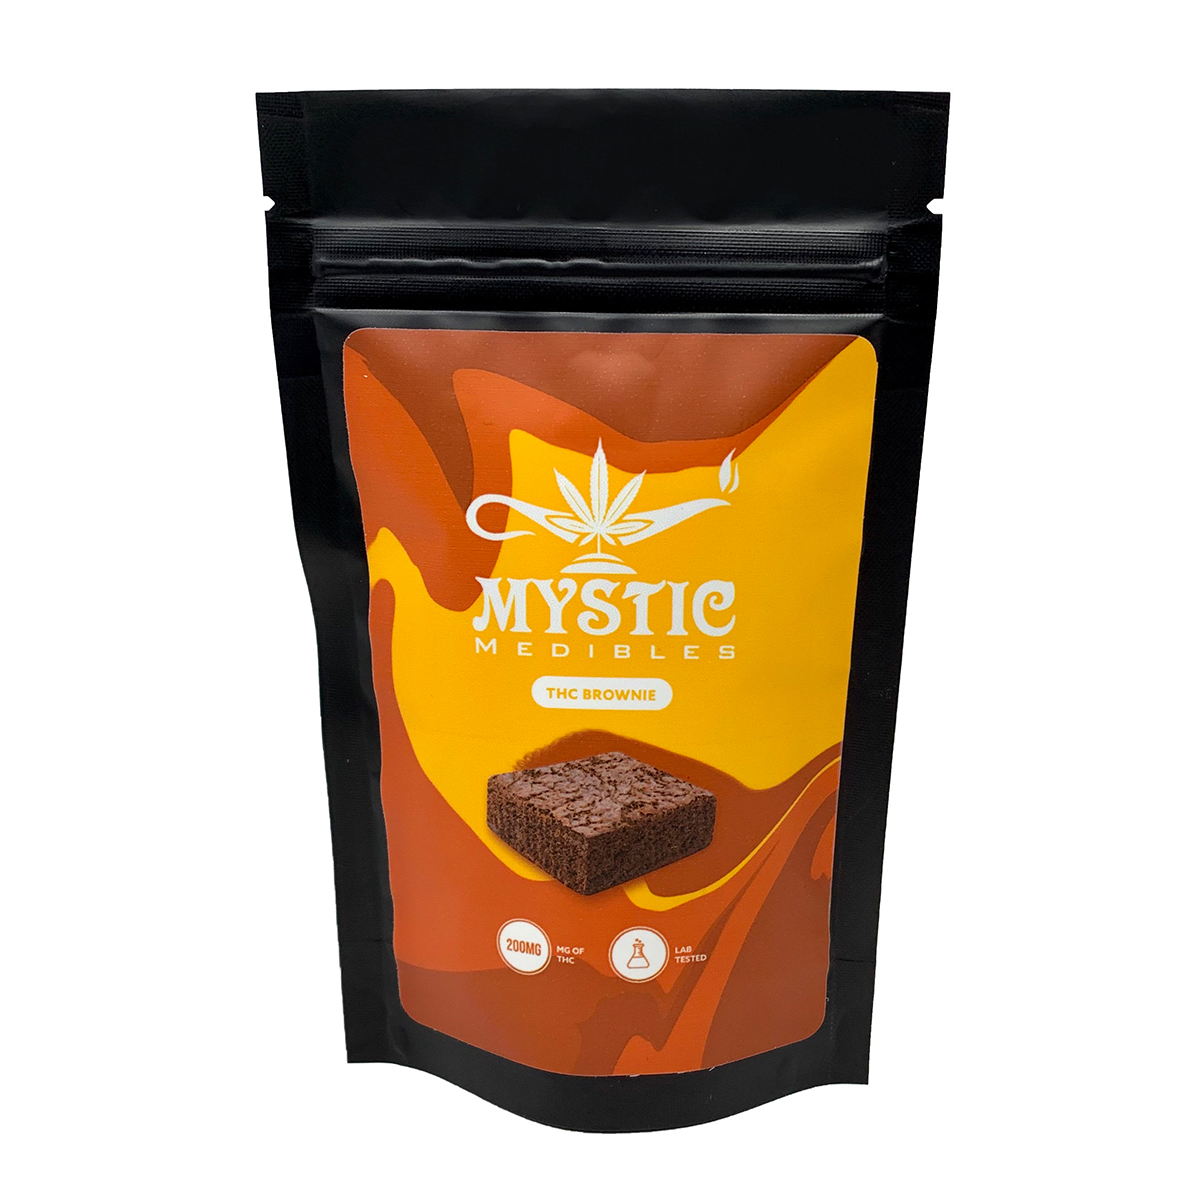 Buy Mystic Medibles - Brownies 200mg THC Online